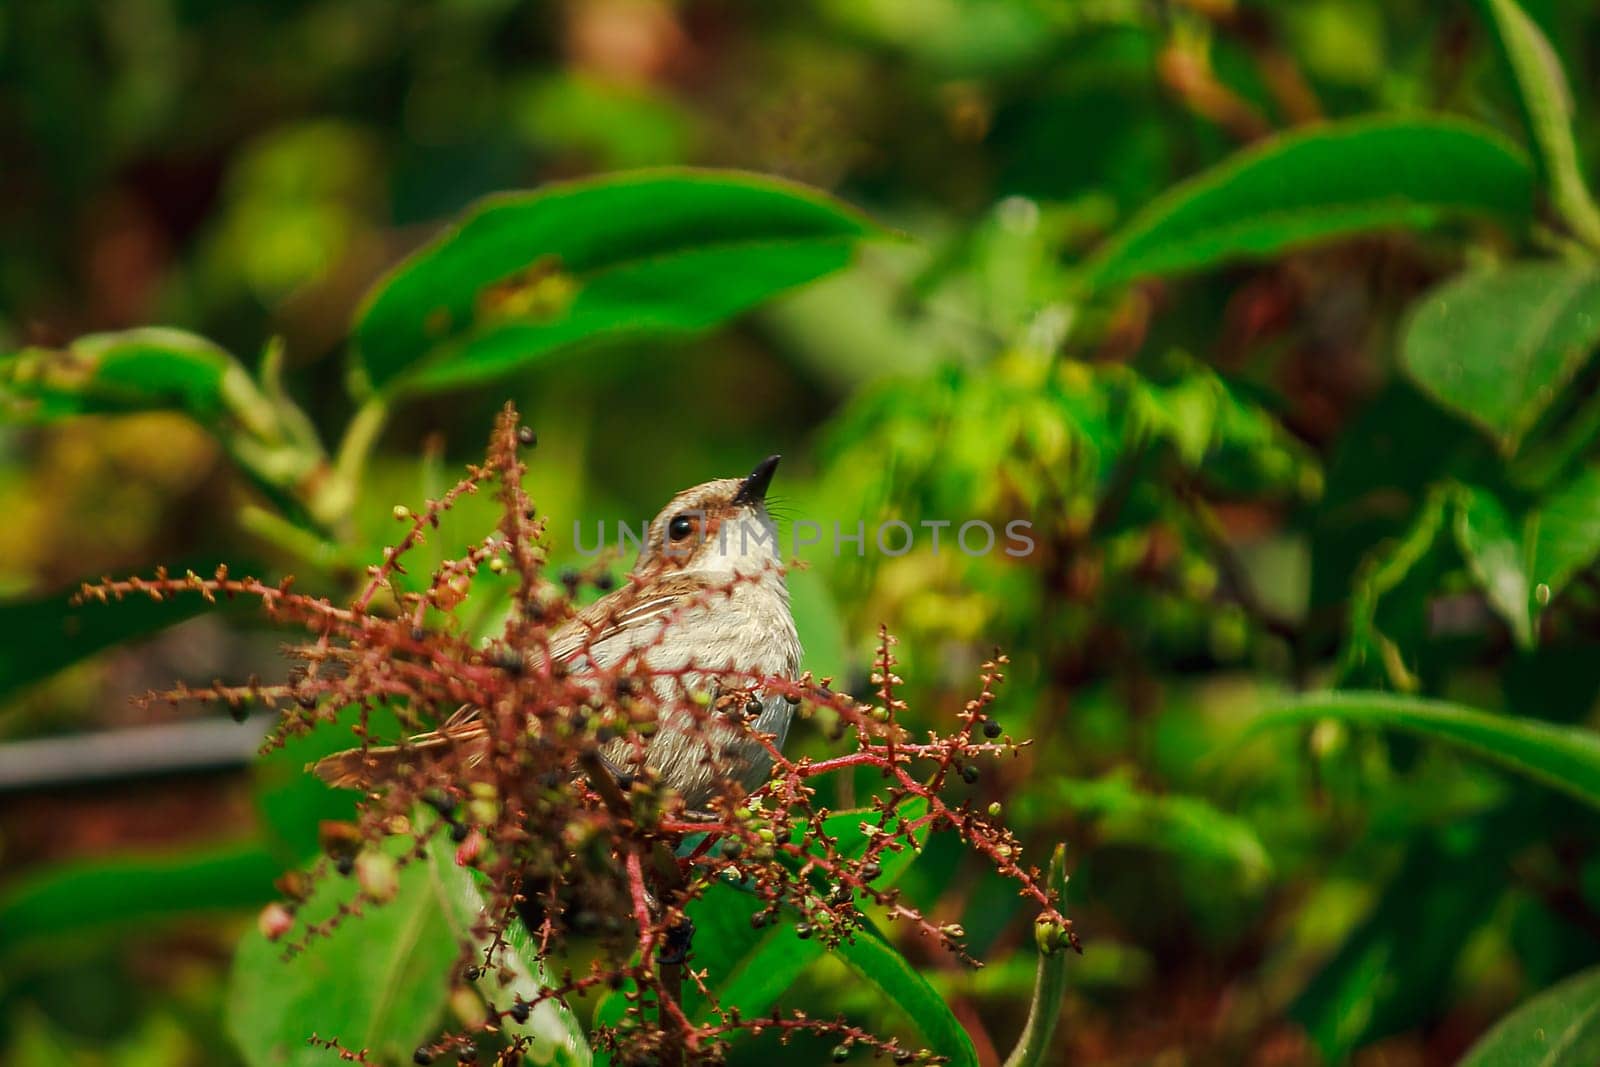 fulvetta (bird) on trees in Doi Inthanon National Park Thailand by Puripatt